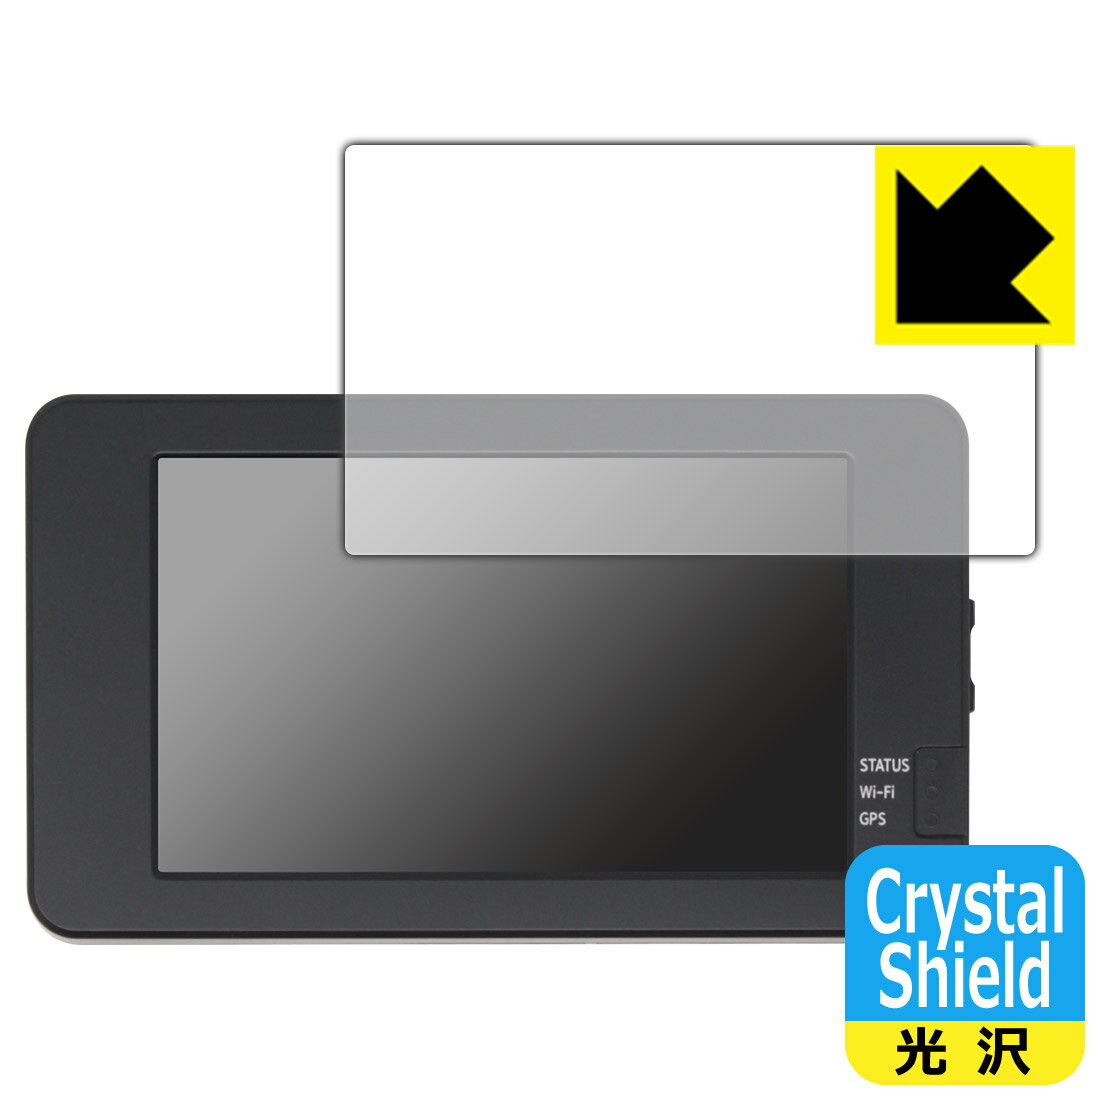 Crystal ShieldyzیtB TCL X}[gR p[tFNg4 WHSR-1040 { А